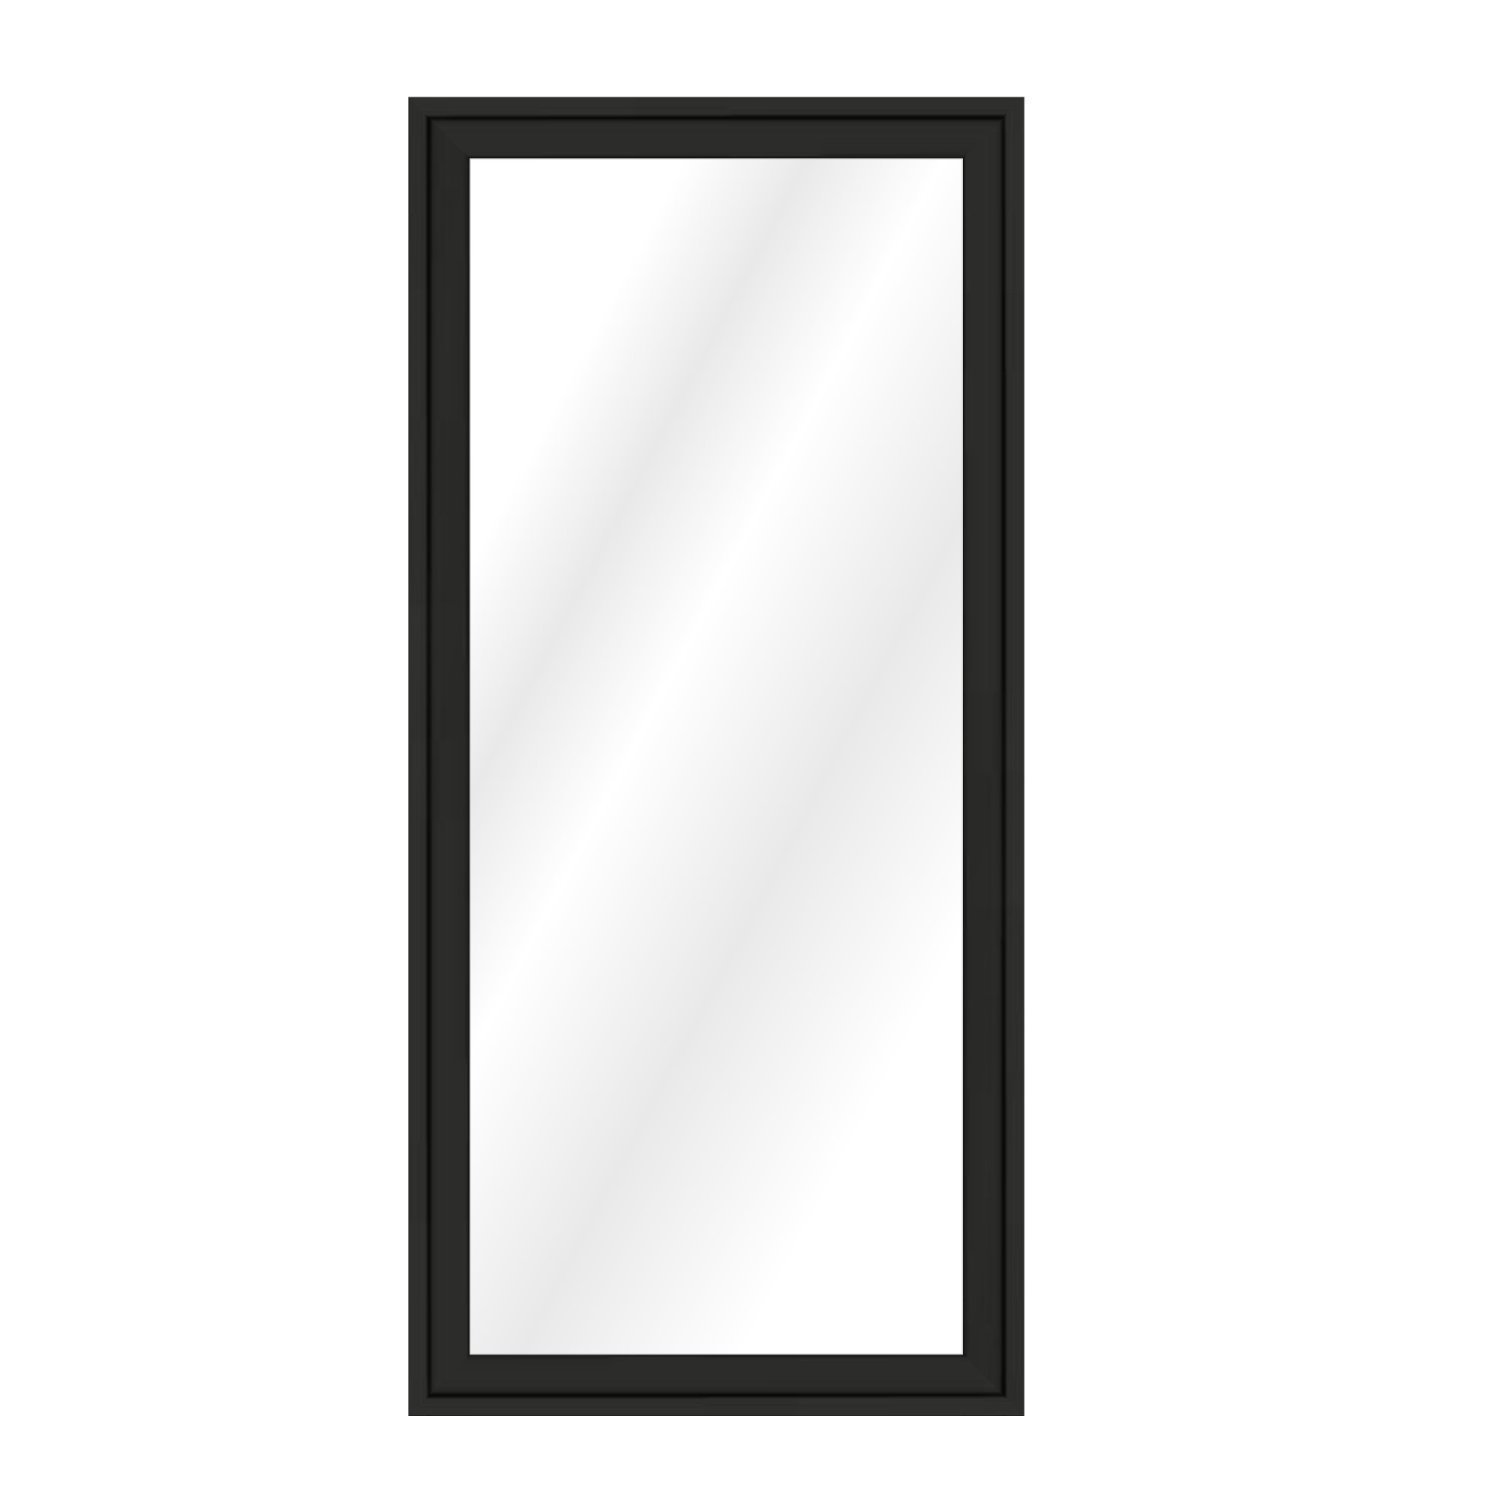 Espelho Elegant 150pt 70cm X 150cm - 1